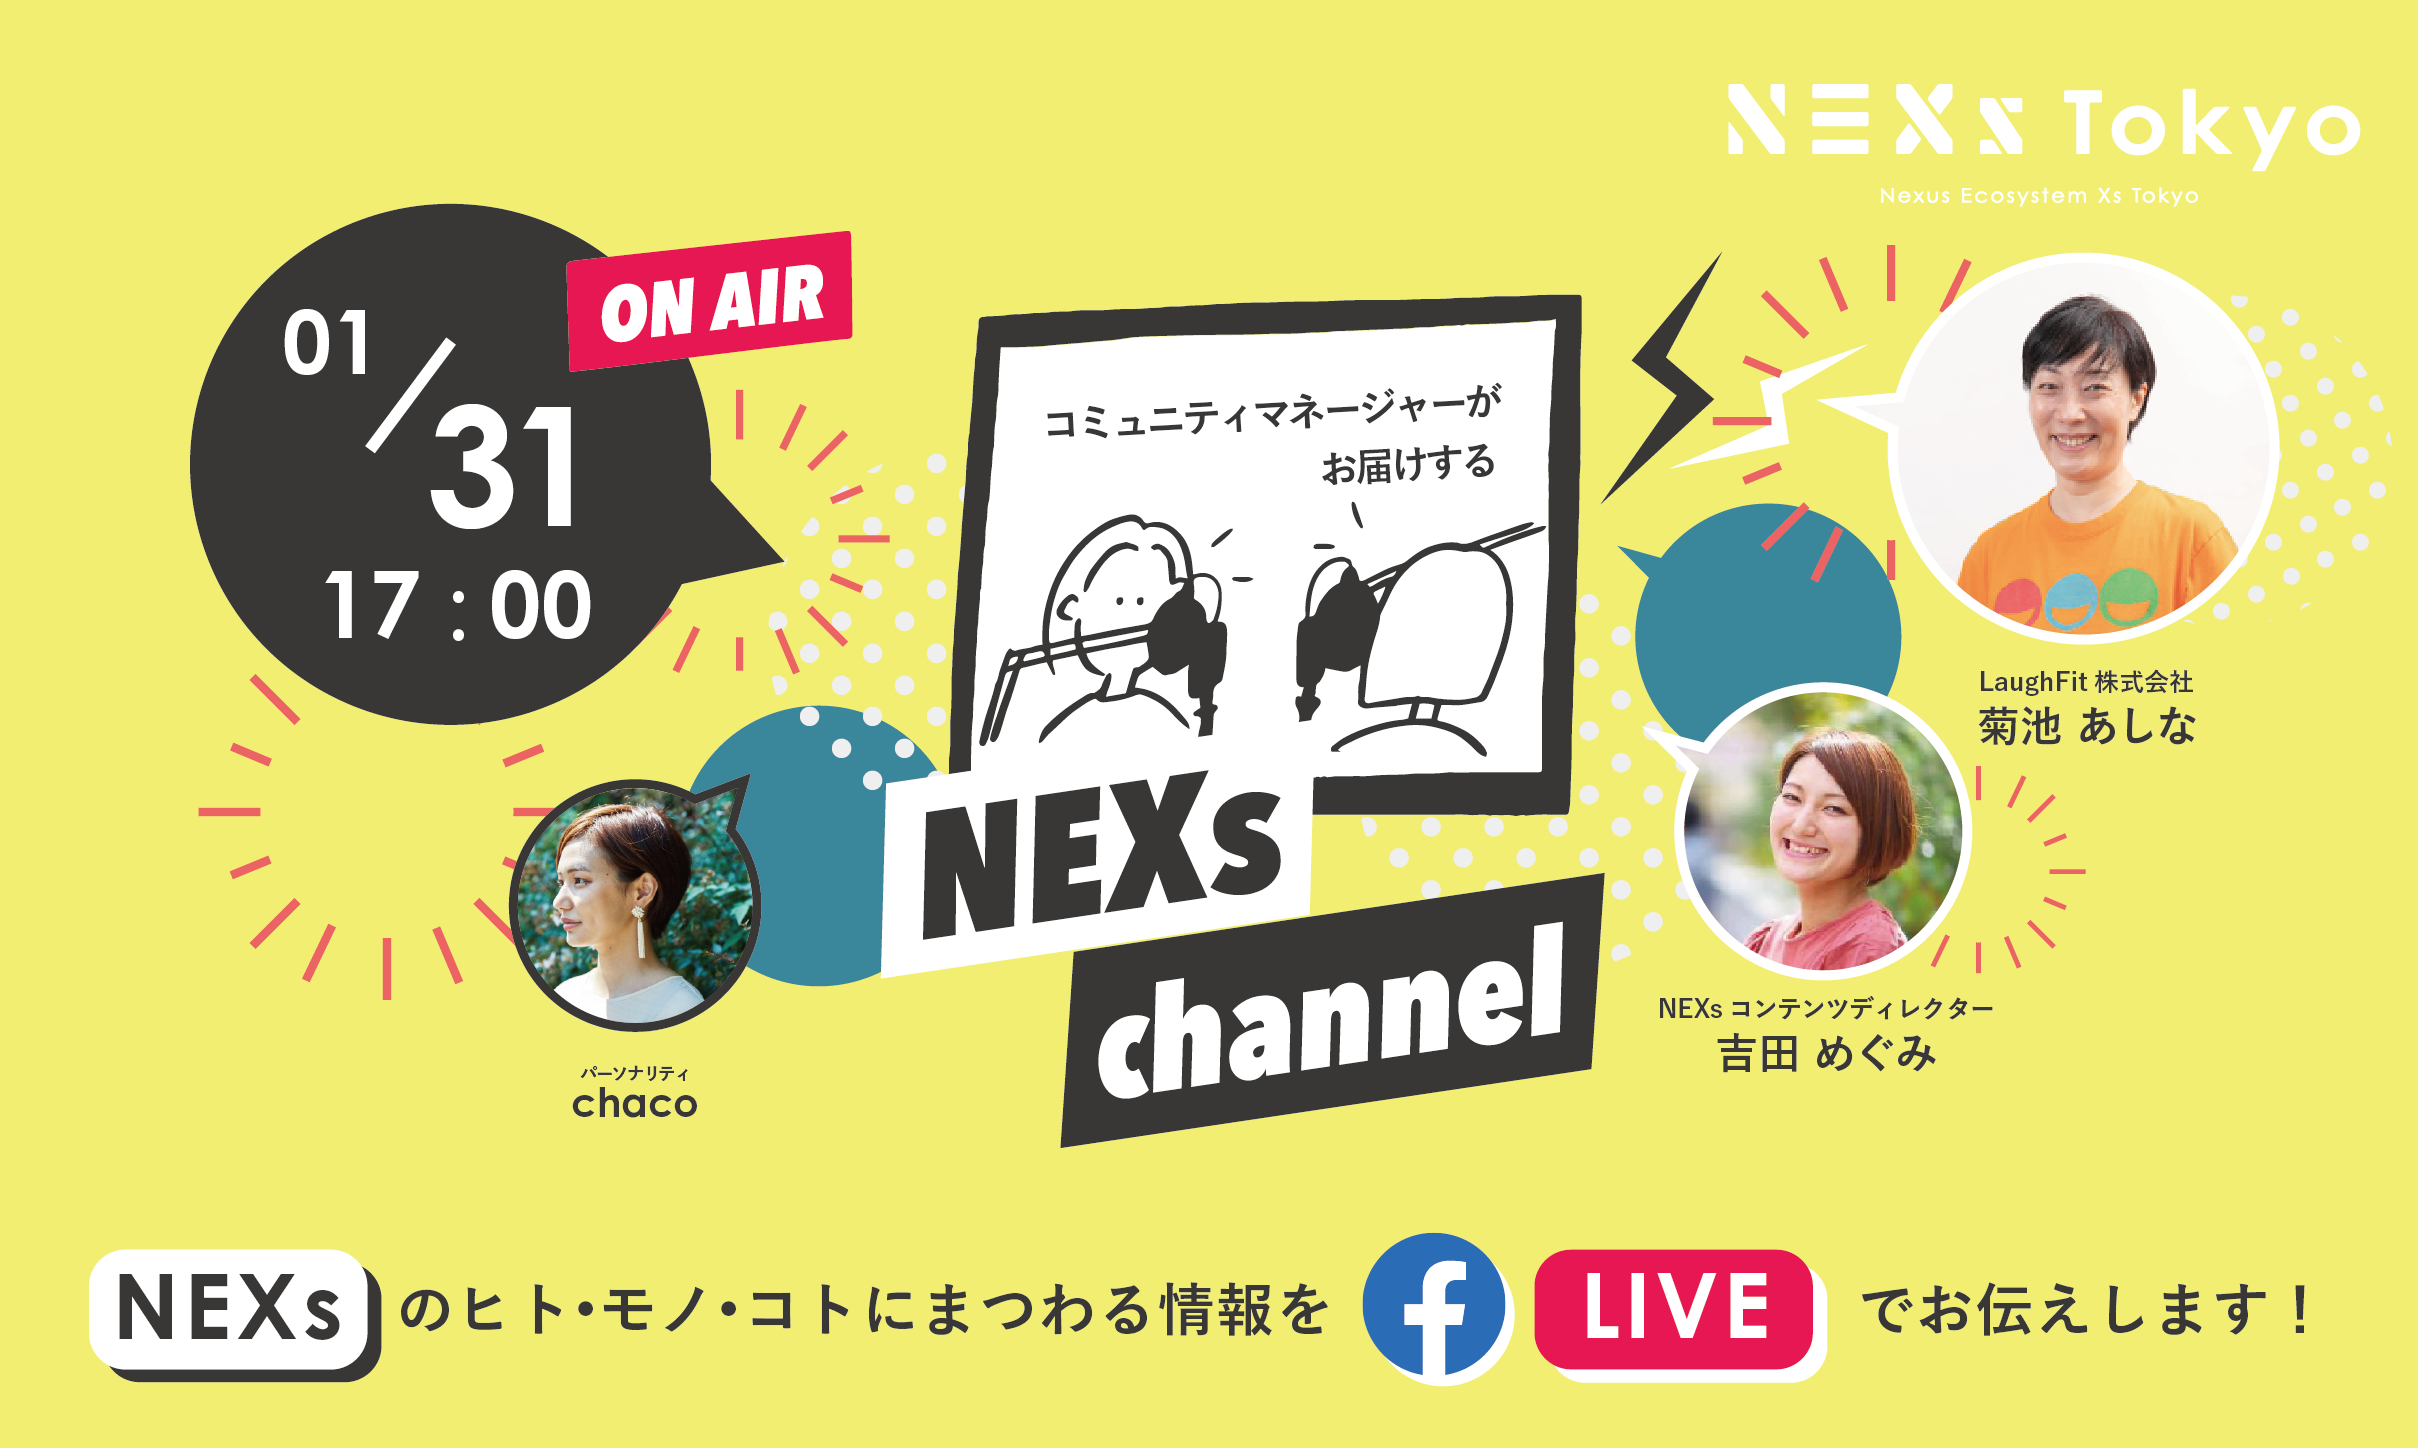 NEXs channel #25 -NEXs Tokyoのヒト・モノ・コトを特設ラジオブースから生放送でお届け！-